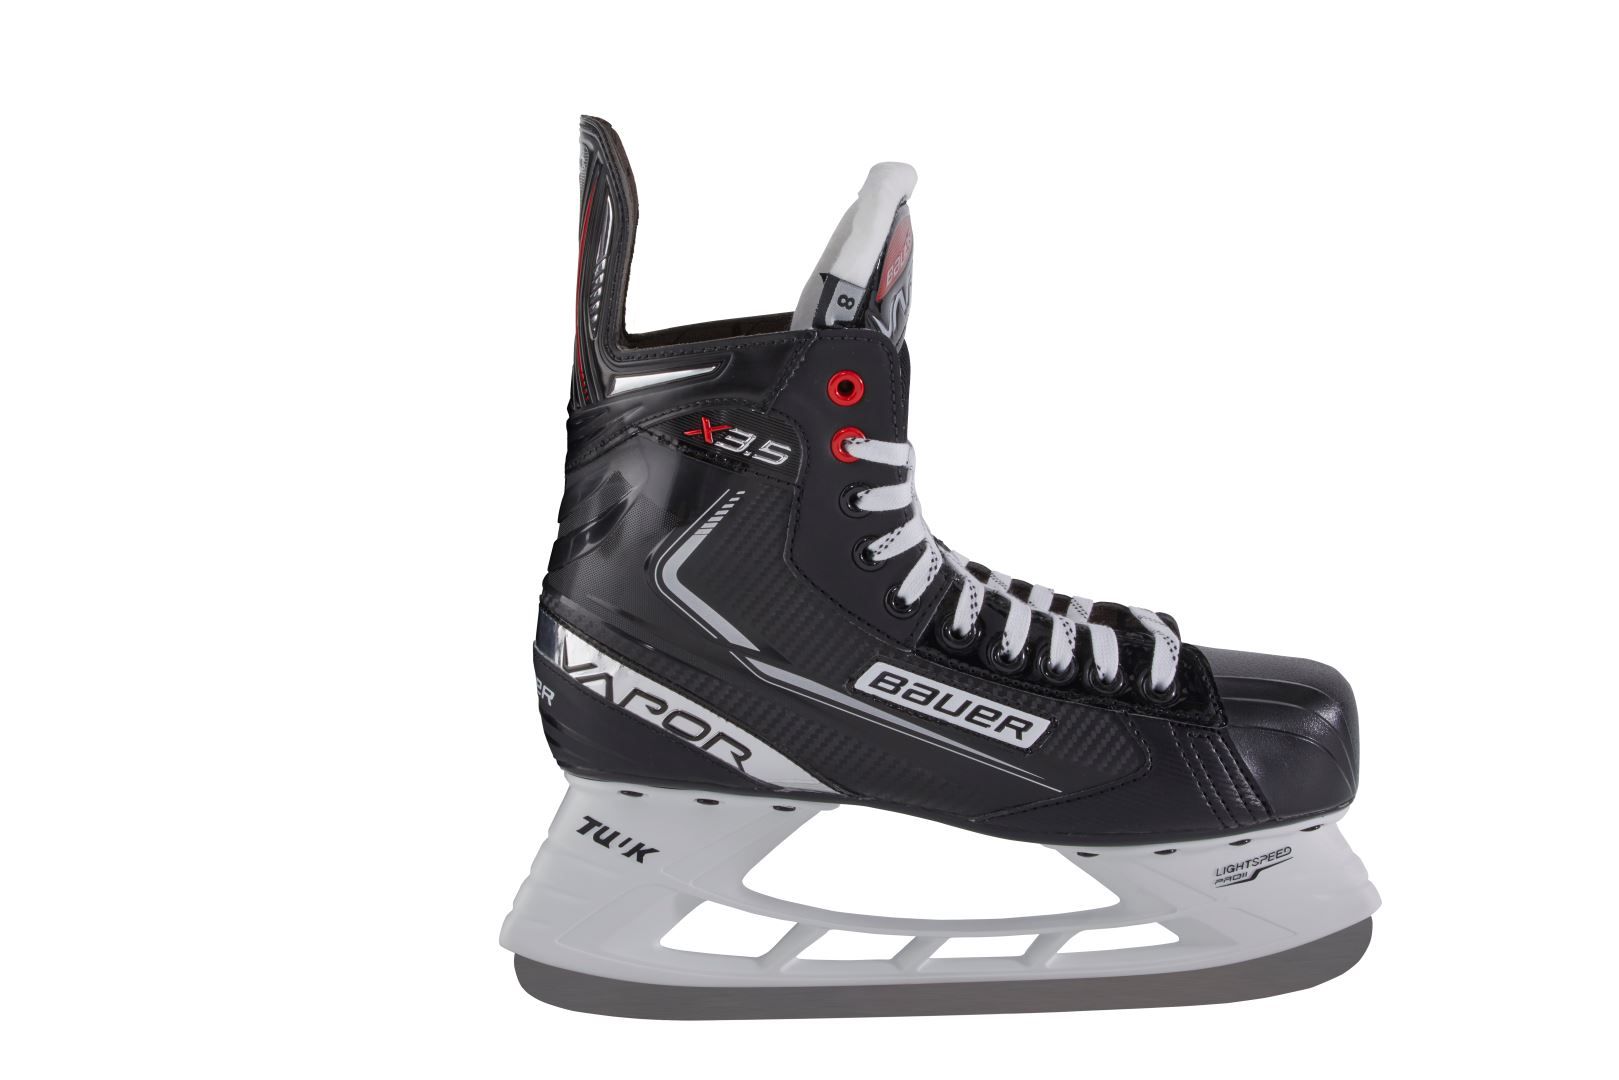 Touhou Vete maximaliseren IJshockey: Bauer Vapor X 3.5 skate